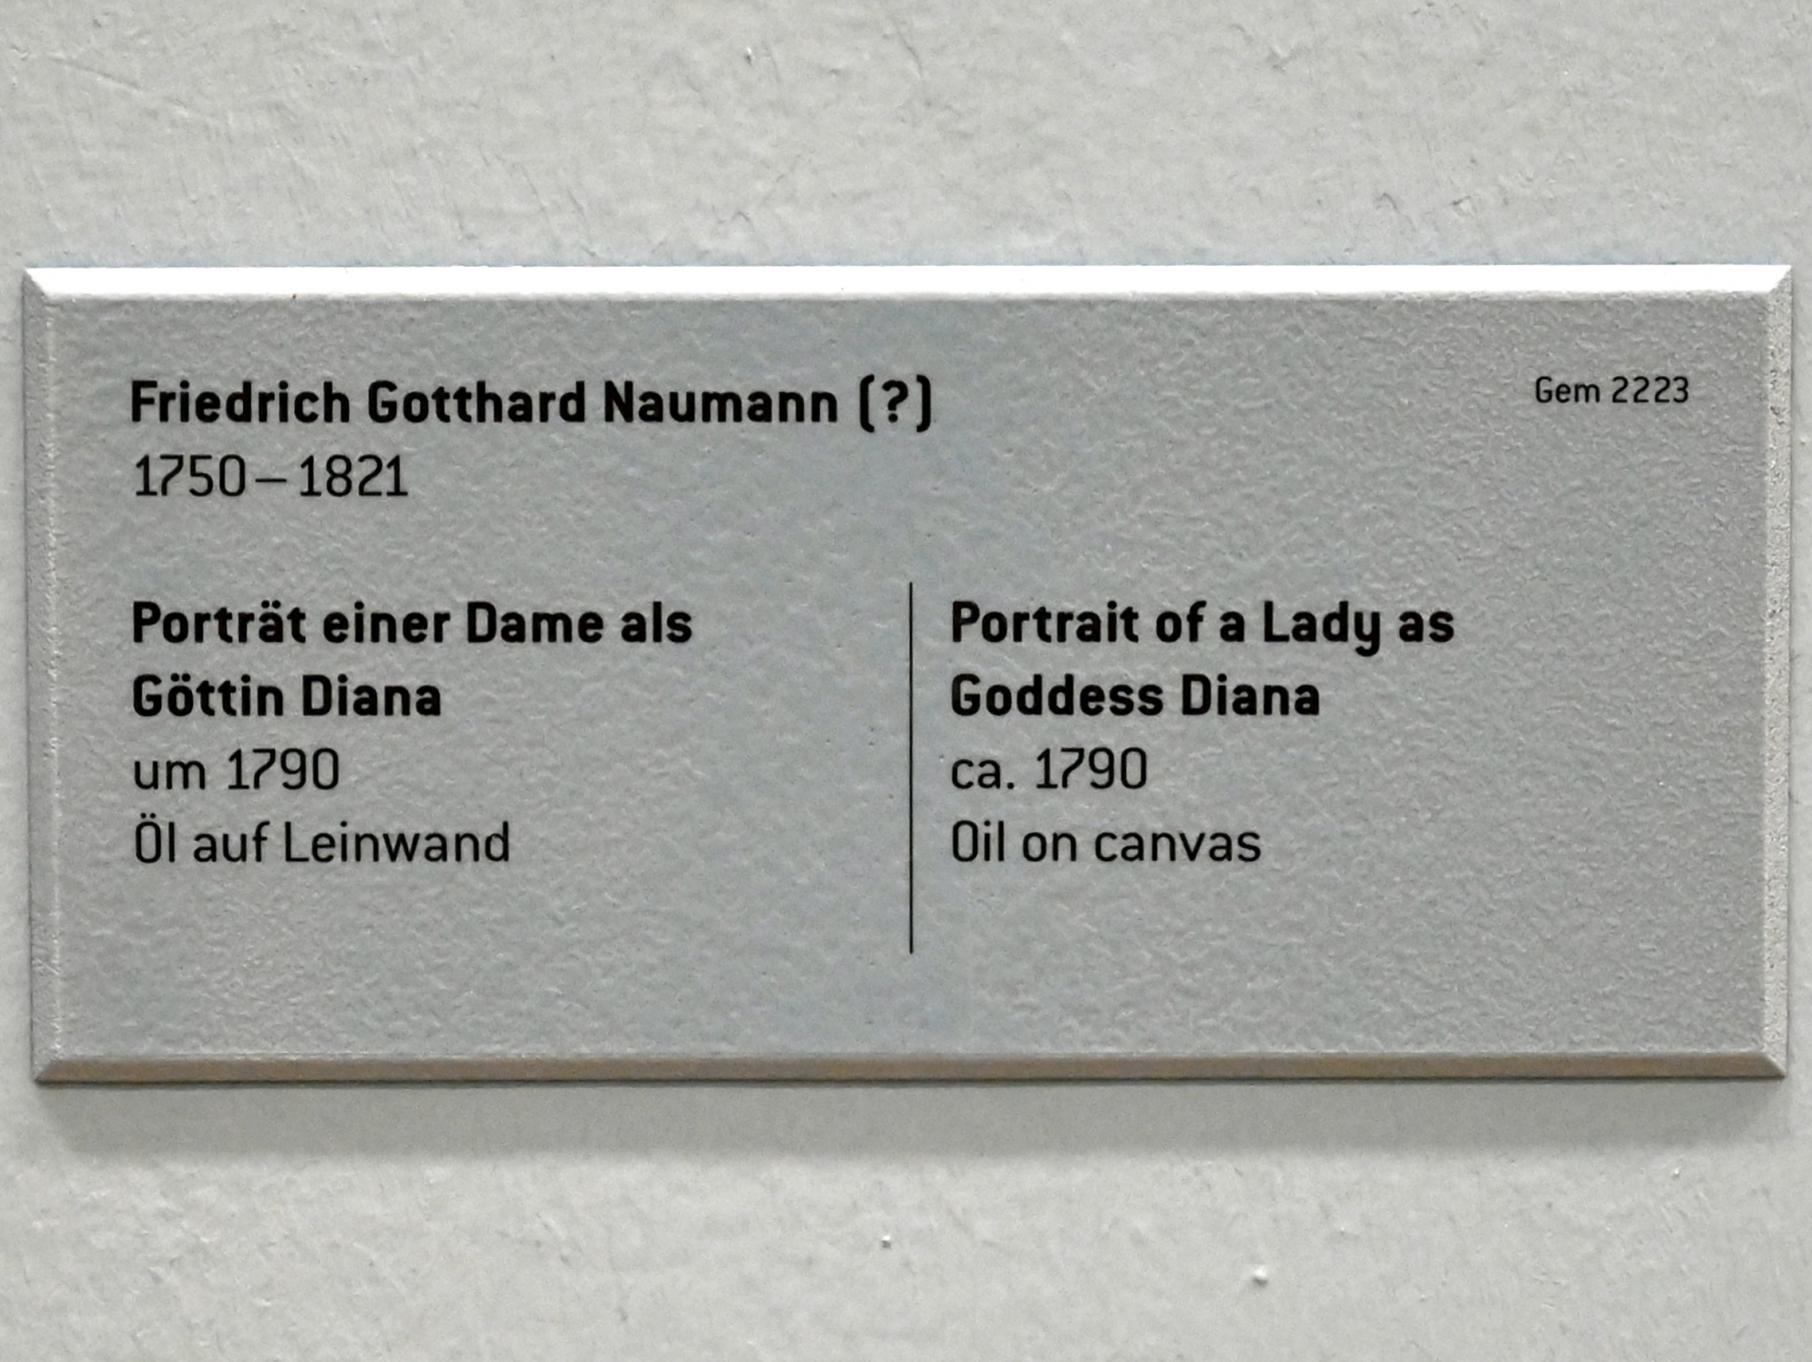 Friedrich Gotthard Naumann (1790), Porträt einer Dame als Göttin Diana, Innsbruck, Tiroler Landesmuseum, Ferdinandeum, Saal 5, um 1790, Bild 2/2